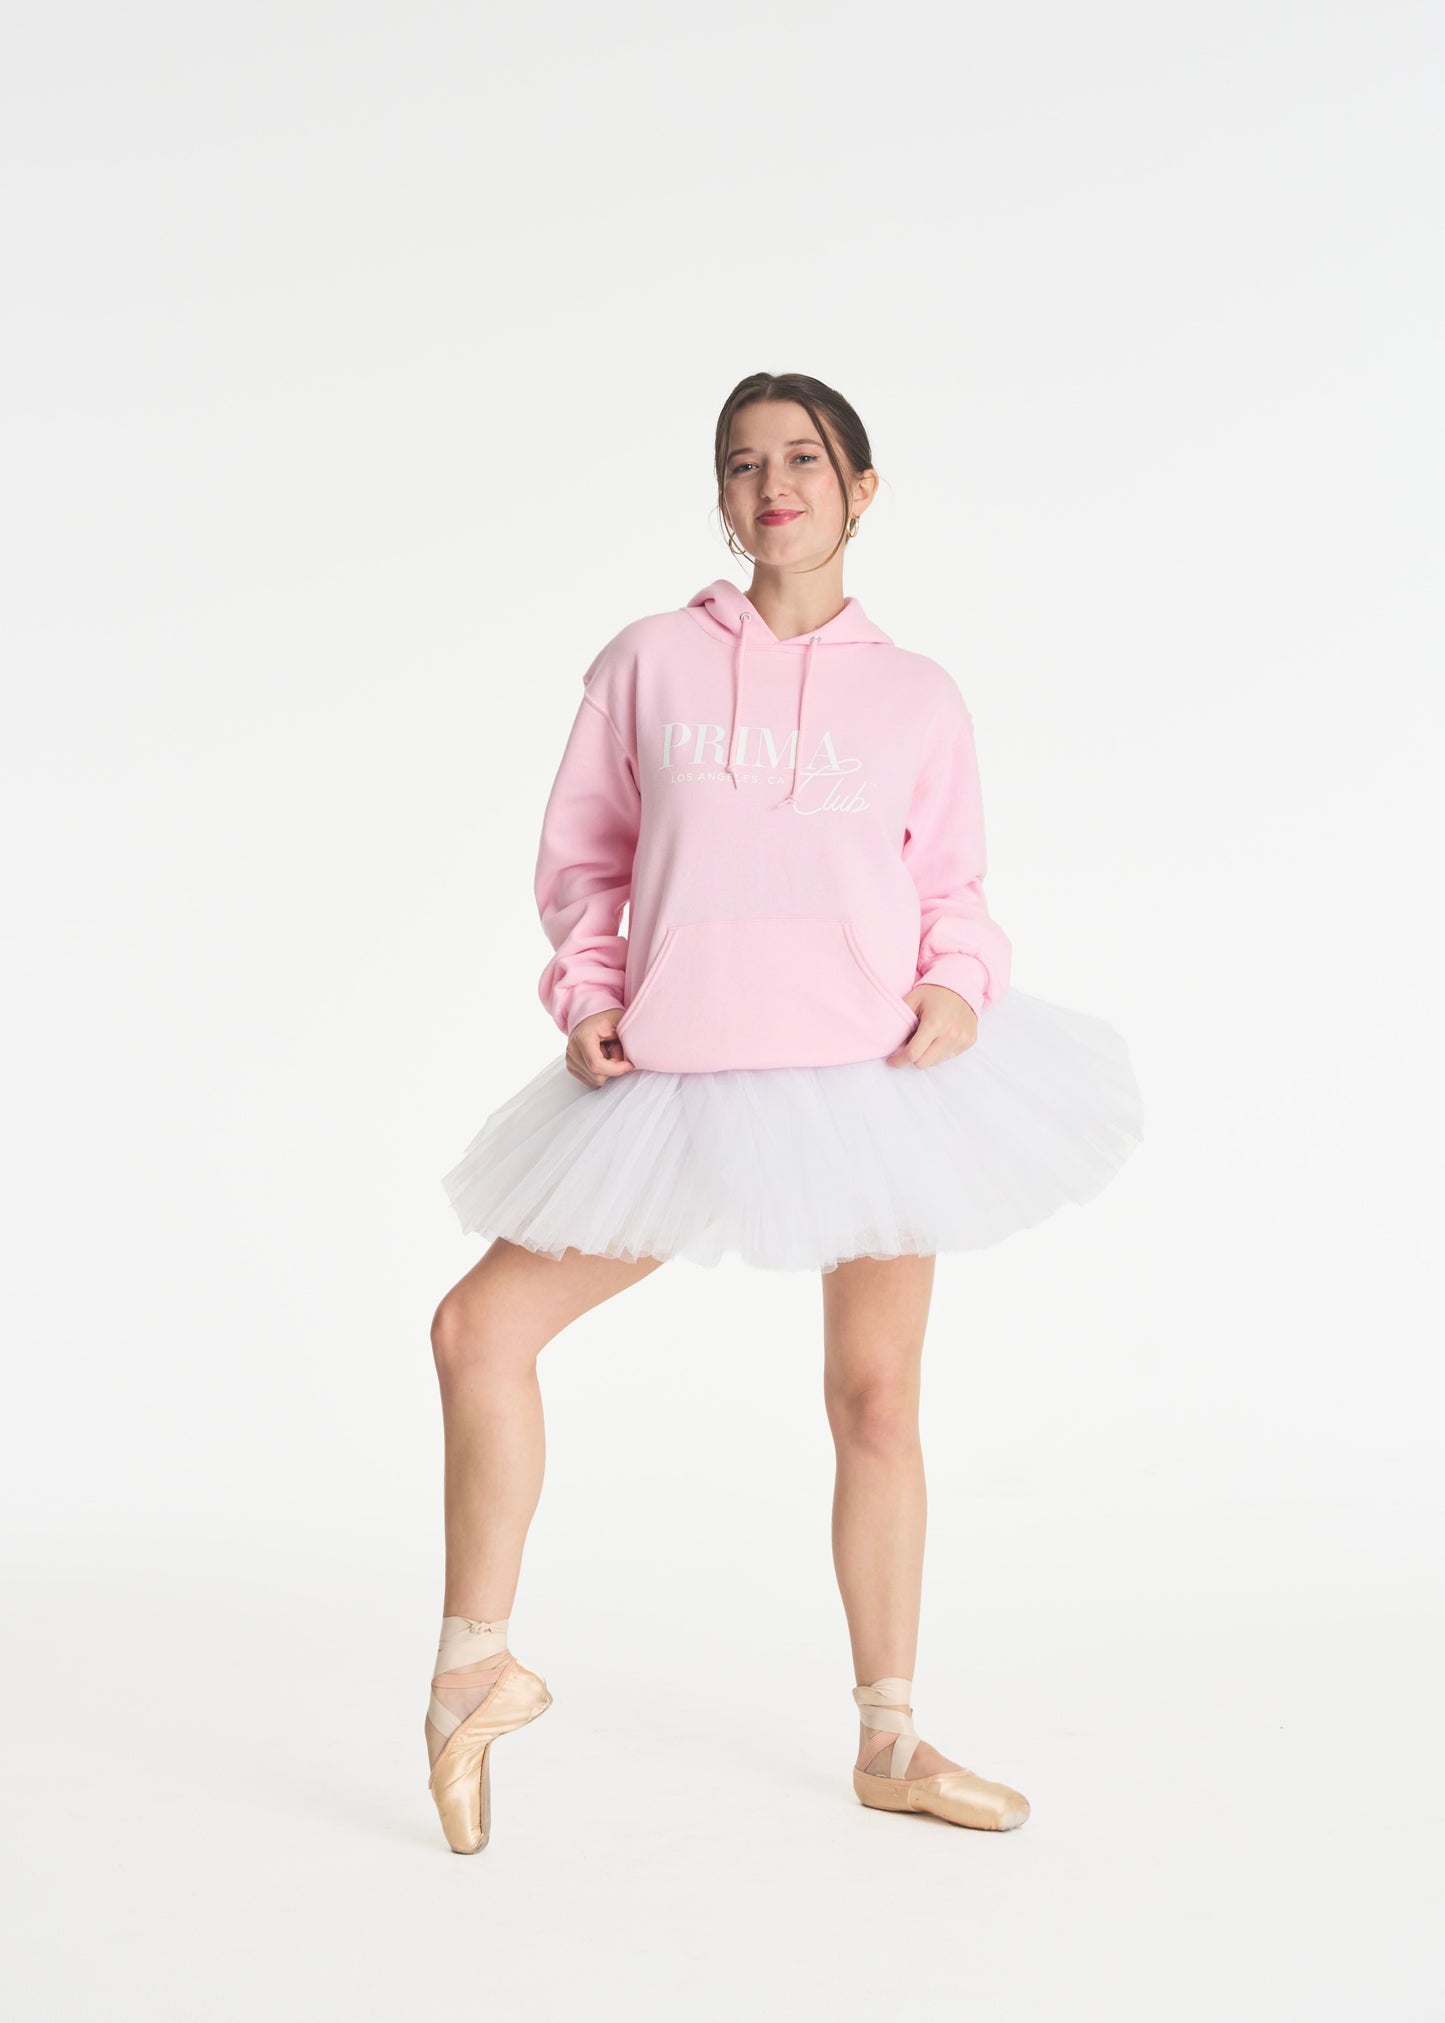 model wearing a tutu and pink Prima Club hoody